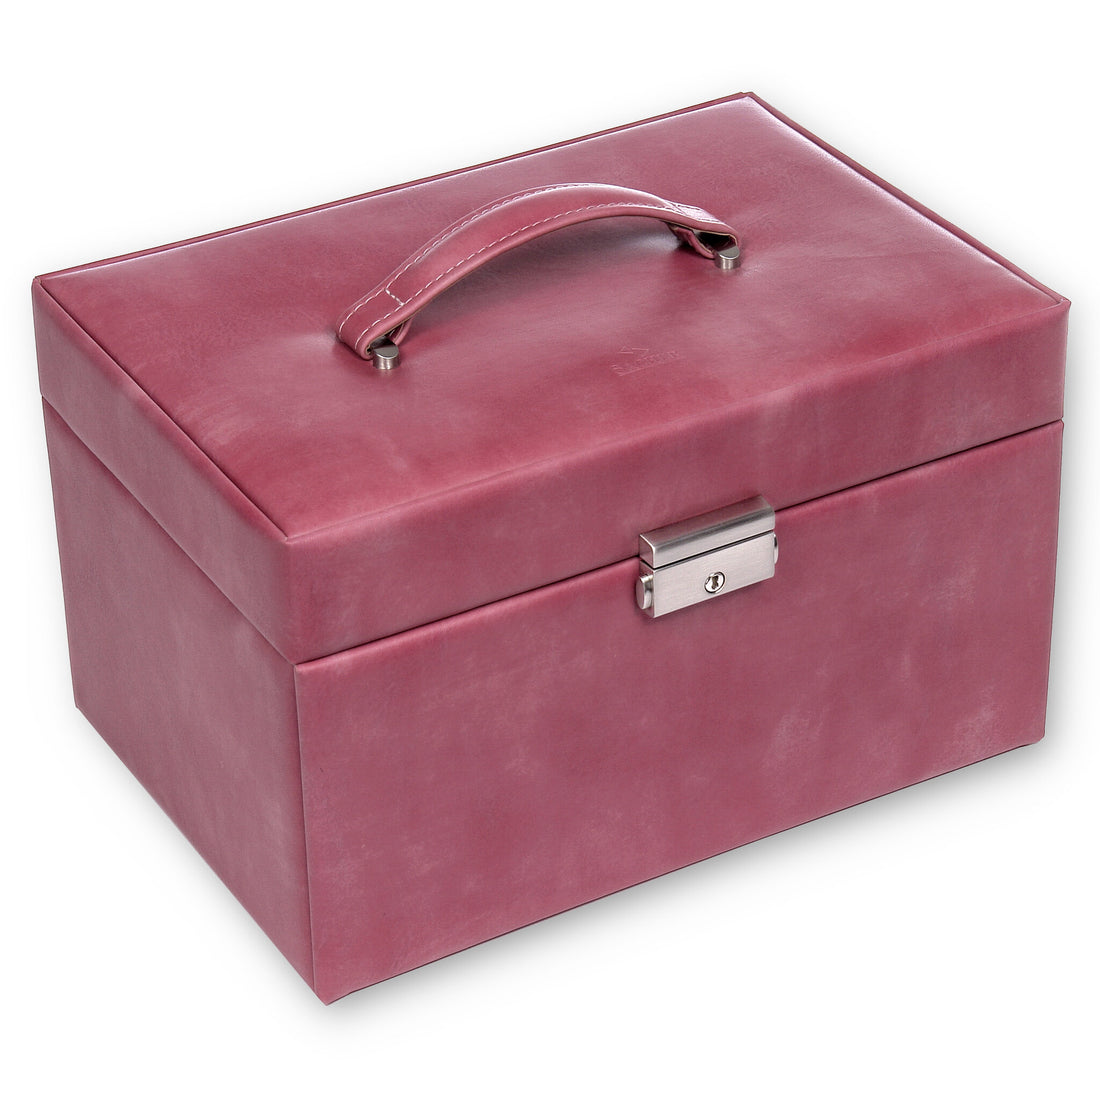 Caja de joyas Jasmin pastello / rosa oscuro